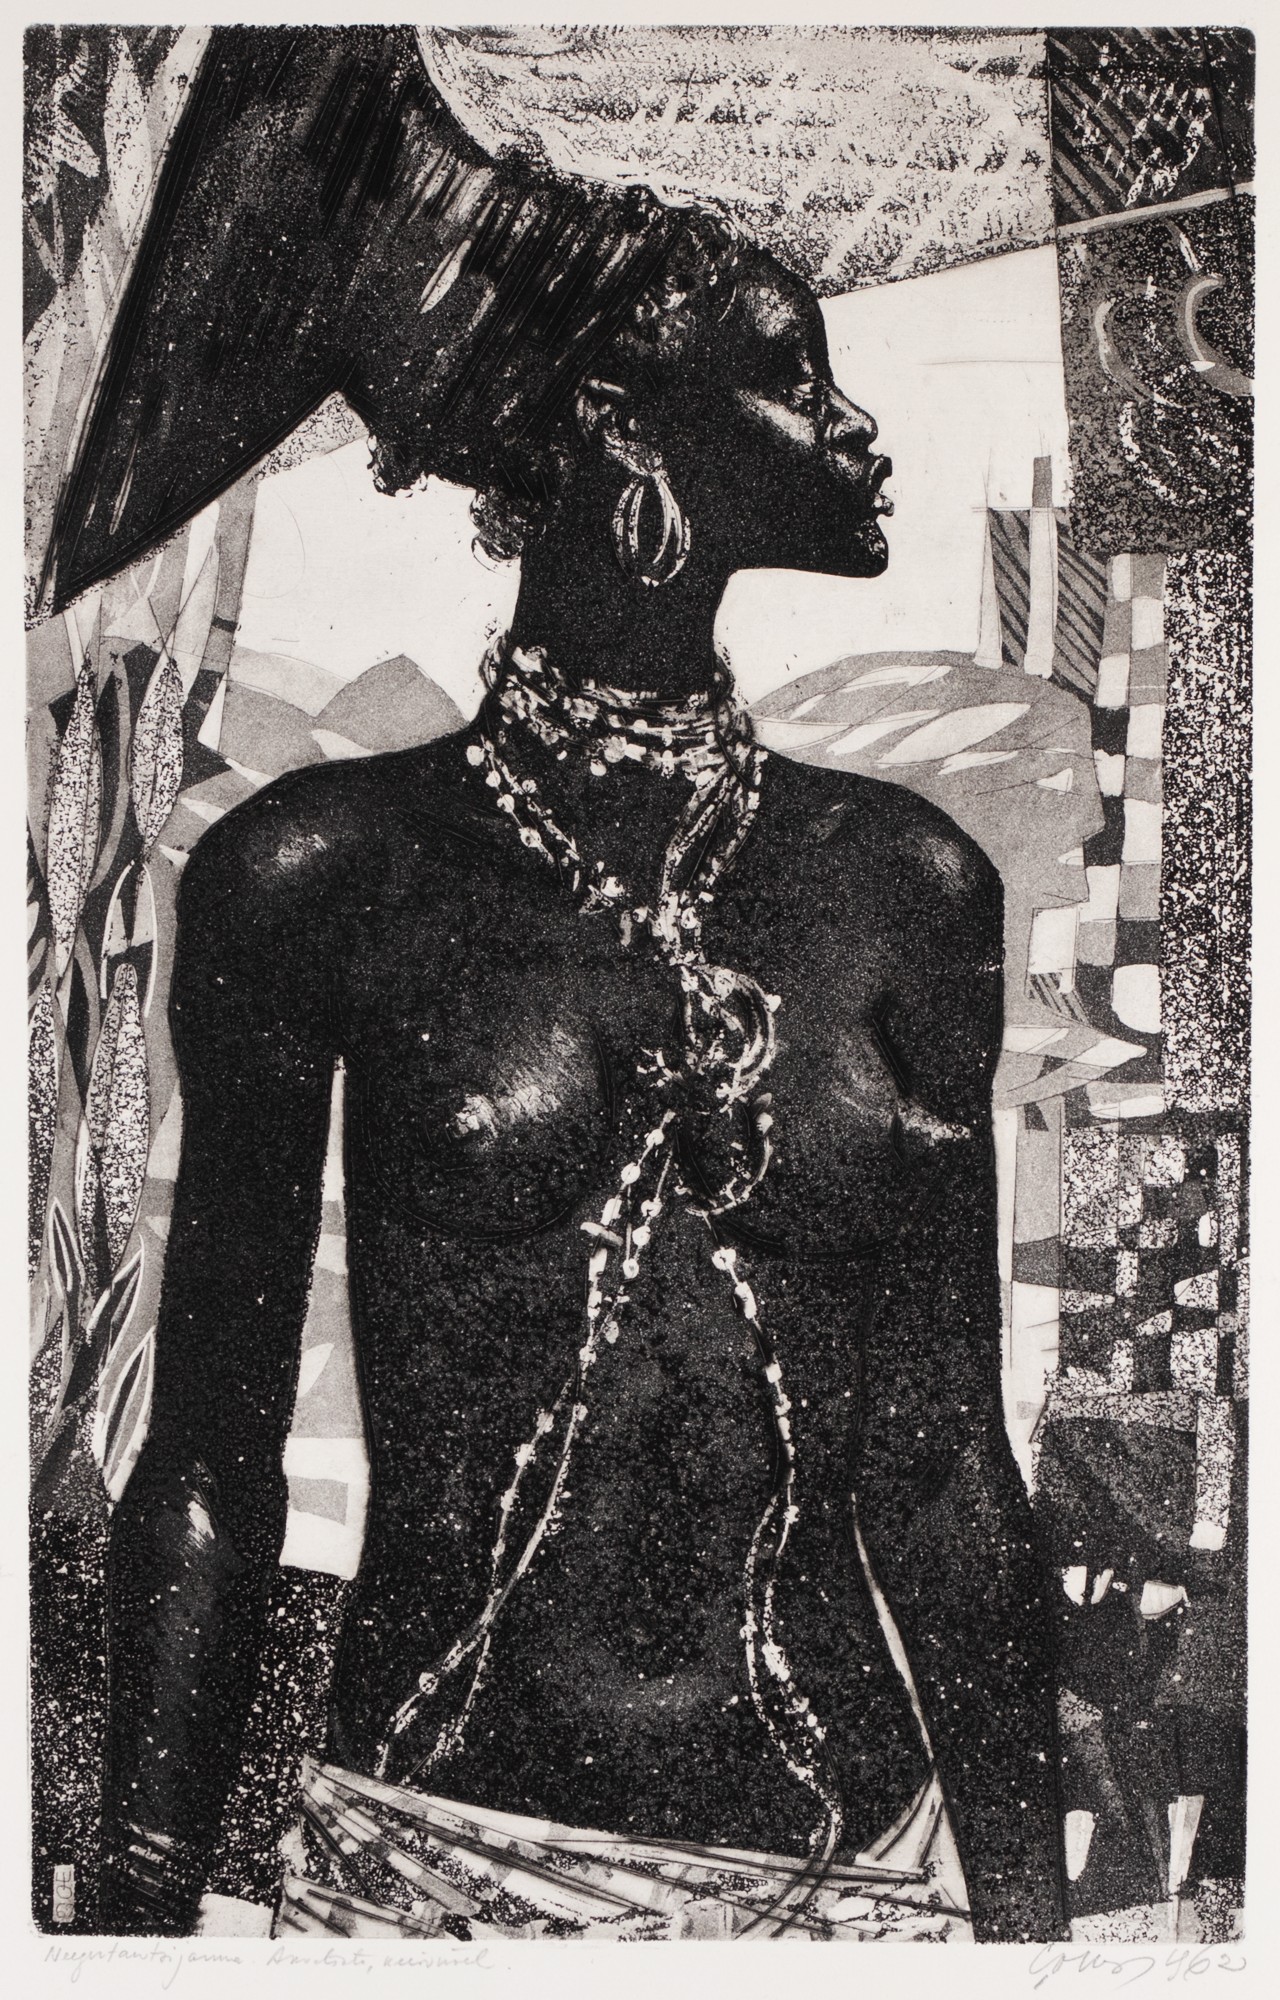 Evald Okas "Original title: Black Female Dancer"